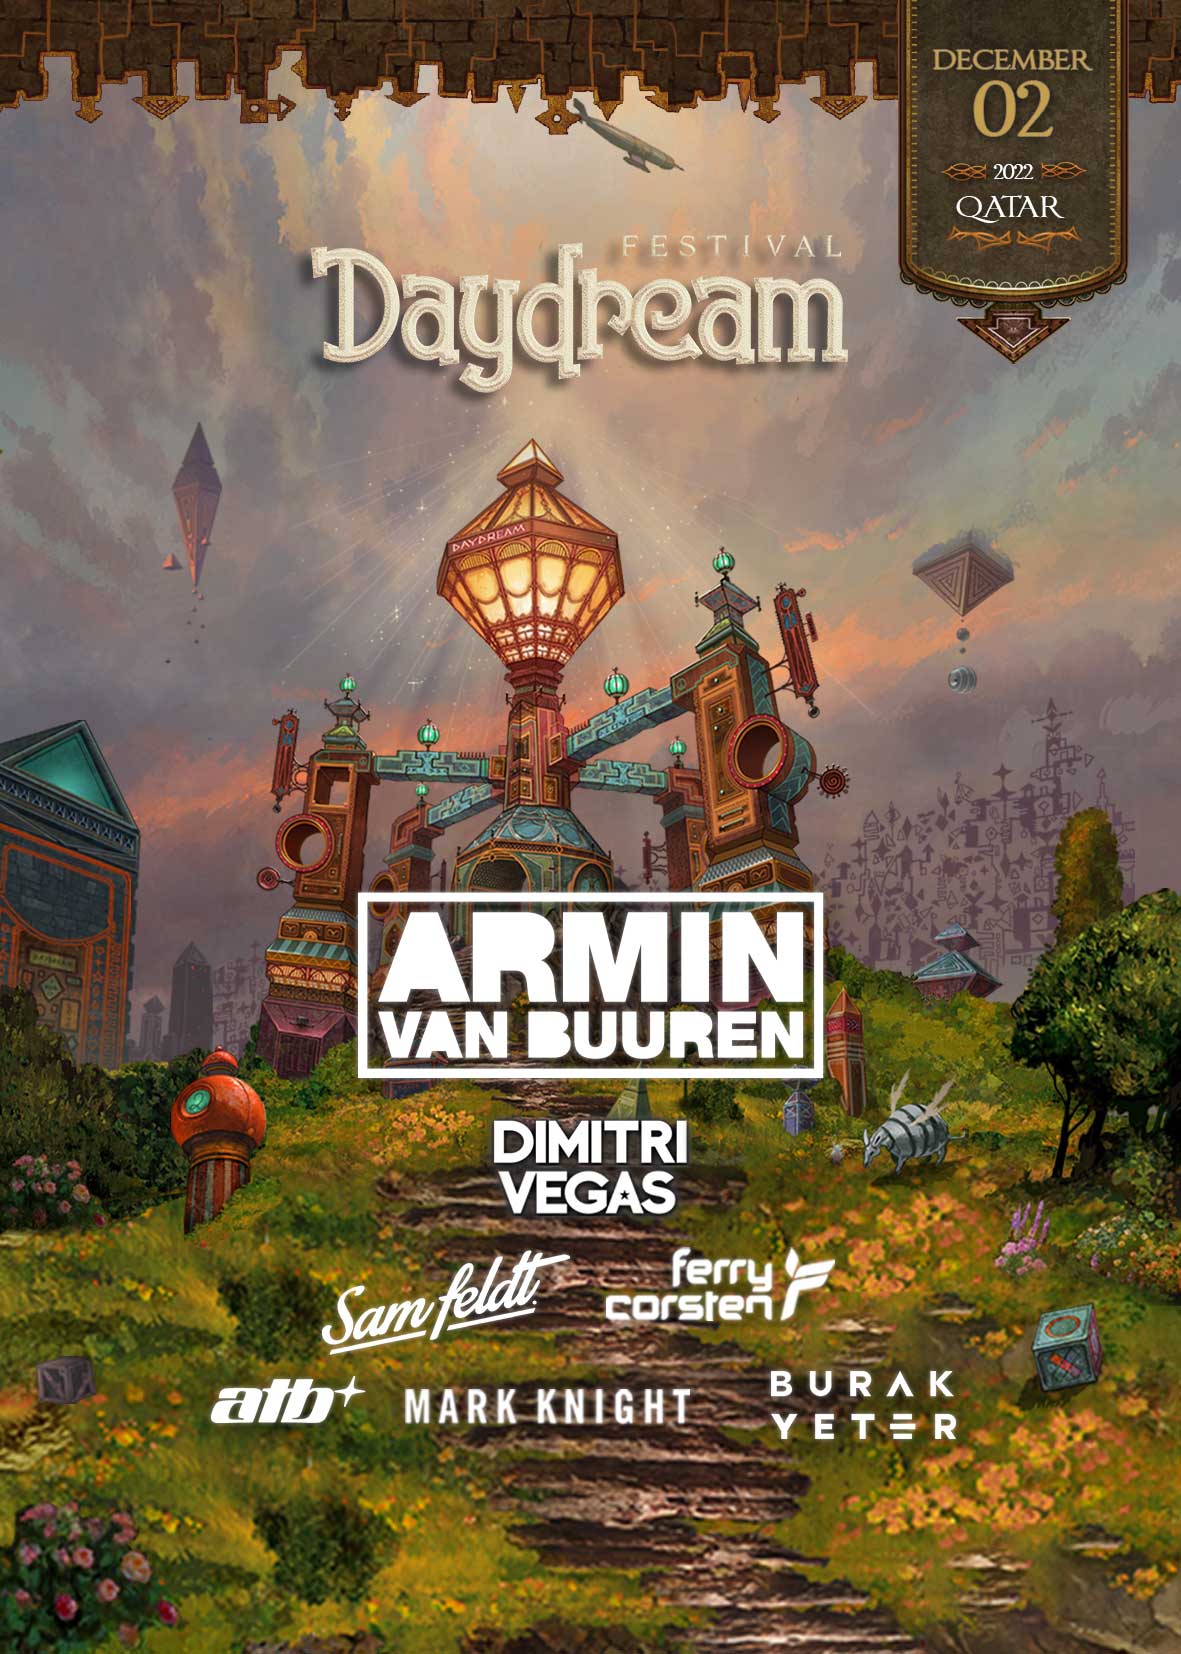 Daydream Music Festival 2nd December